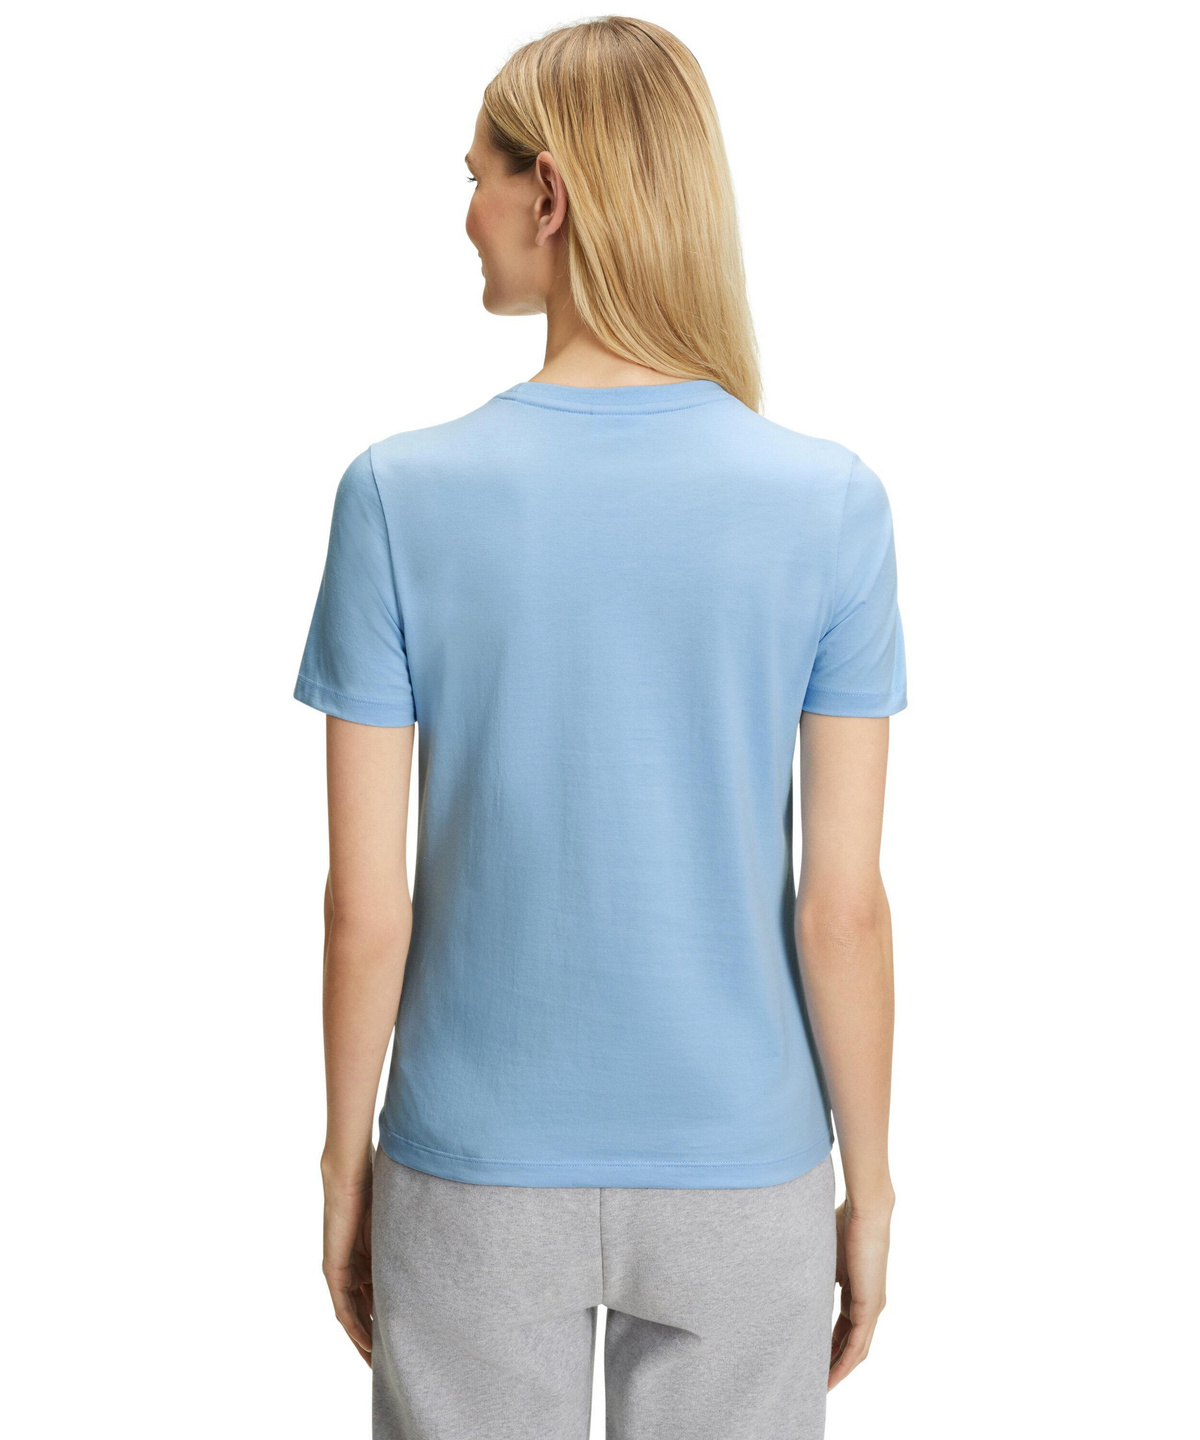 Cathalem Womens Basic T-Shirts Short Sleeve Rib Knit Tee Top,Green M 